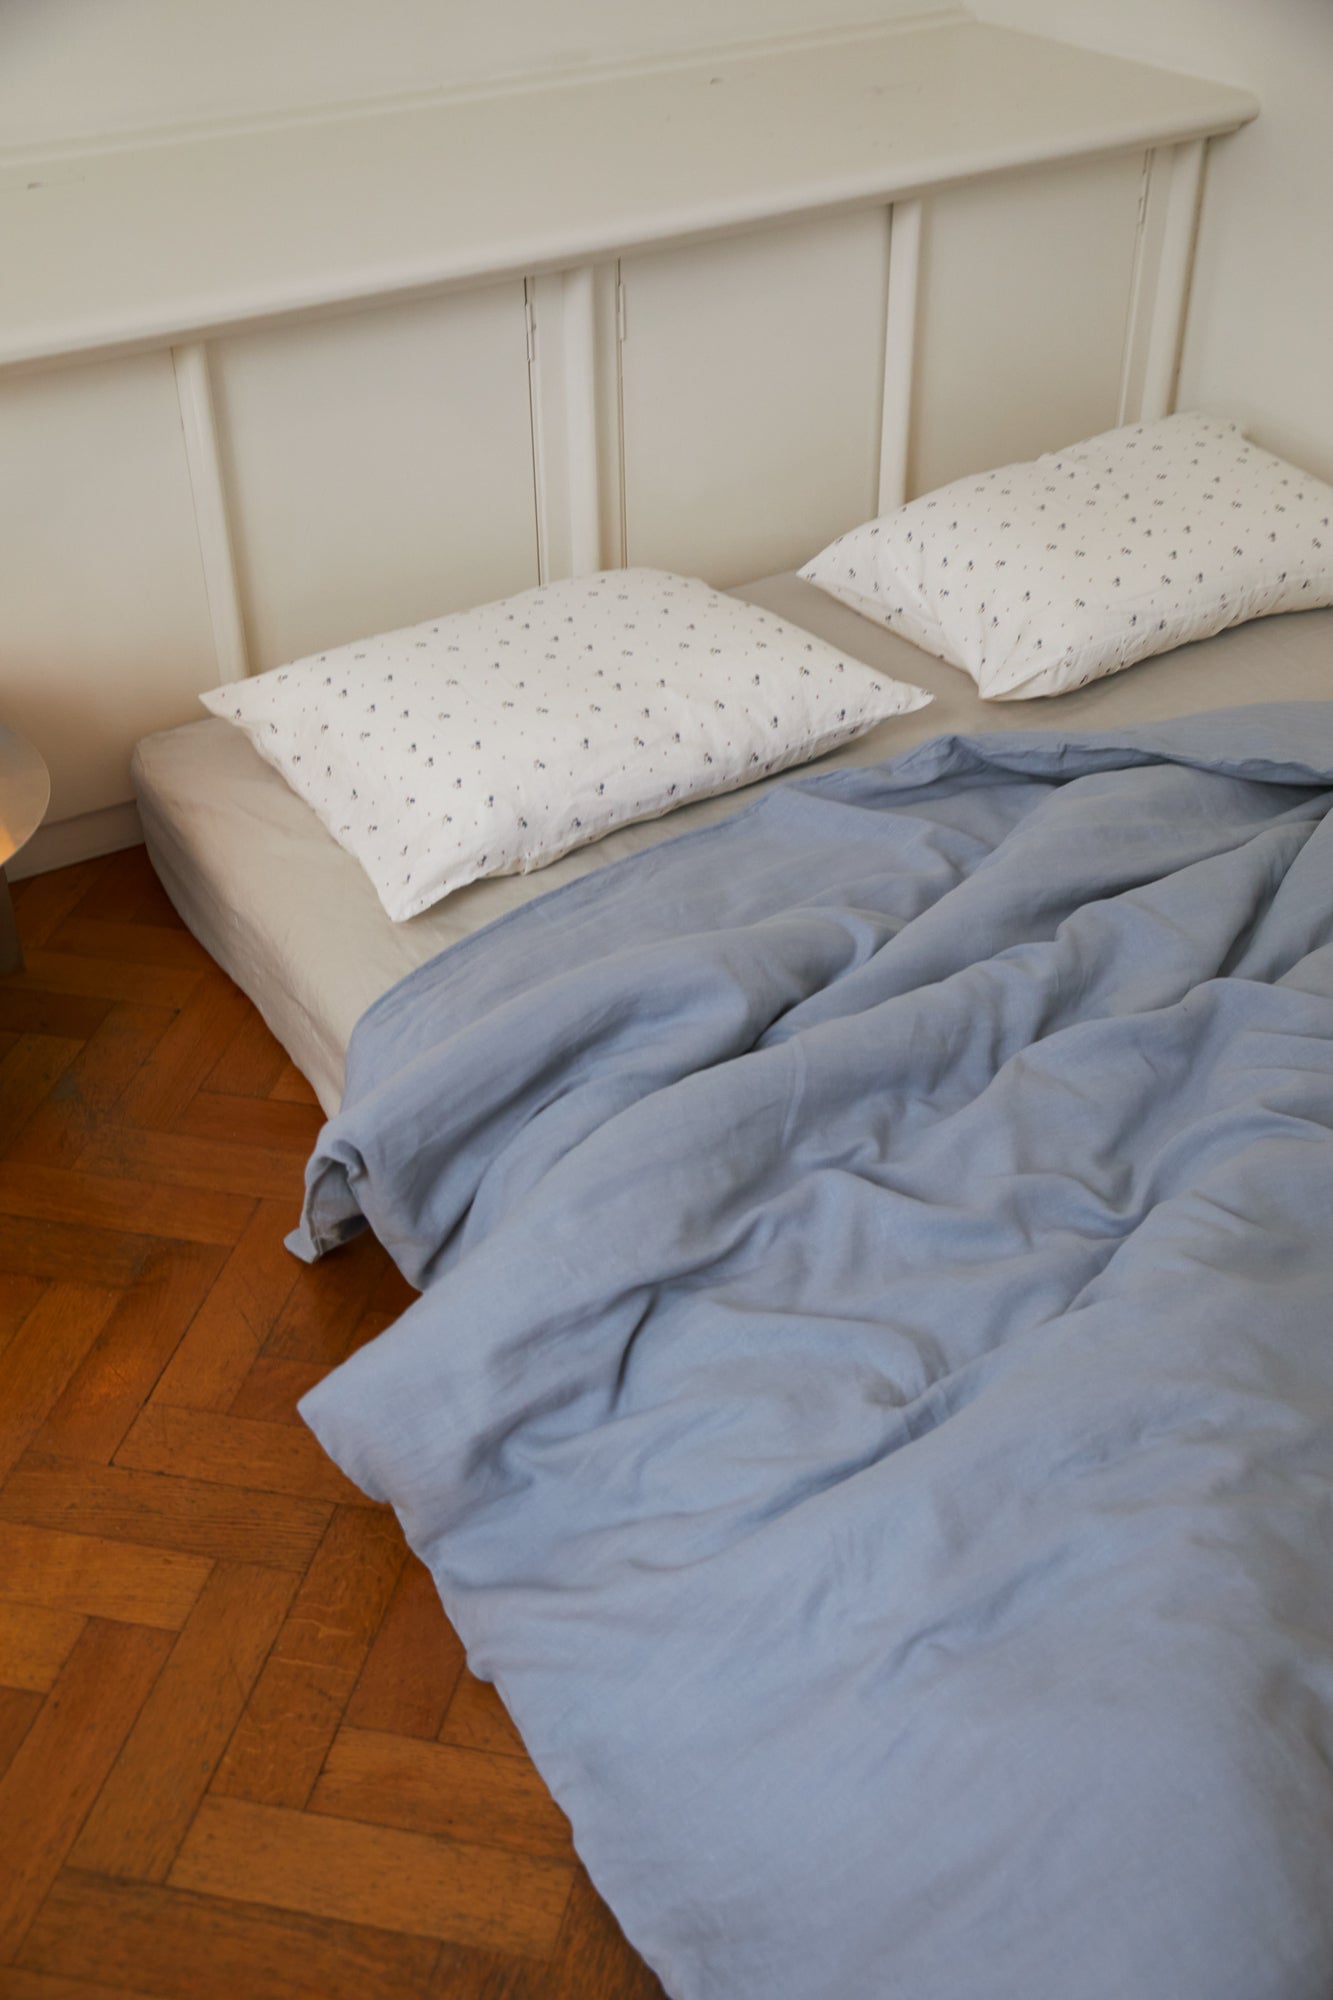 Soft bed with Duvet cover - Cornflower by Deiji Studios against light wall